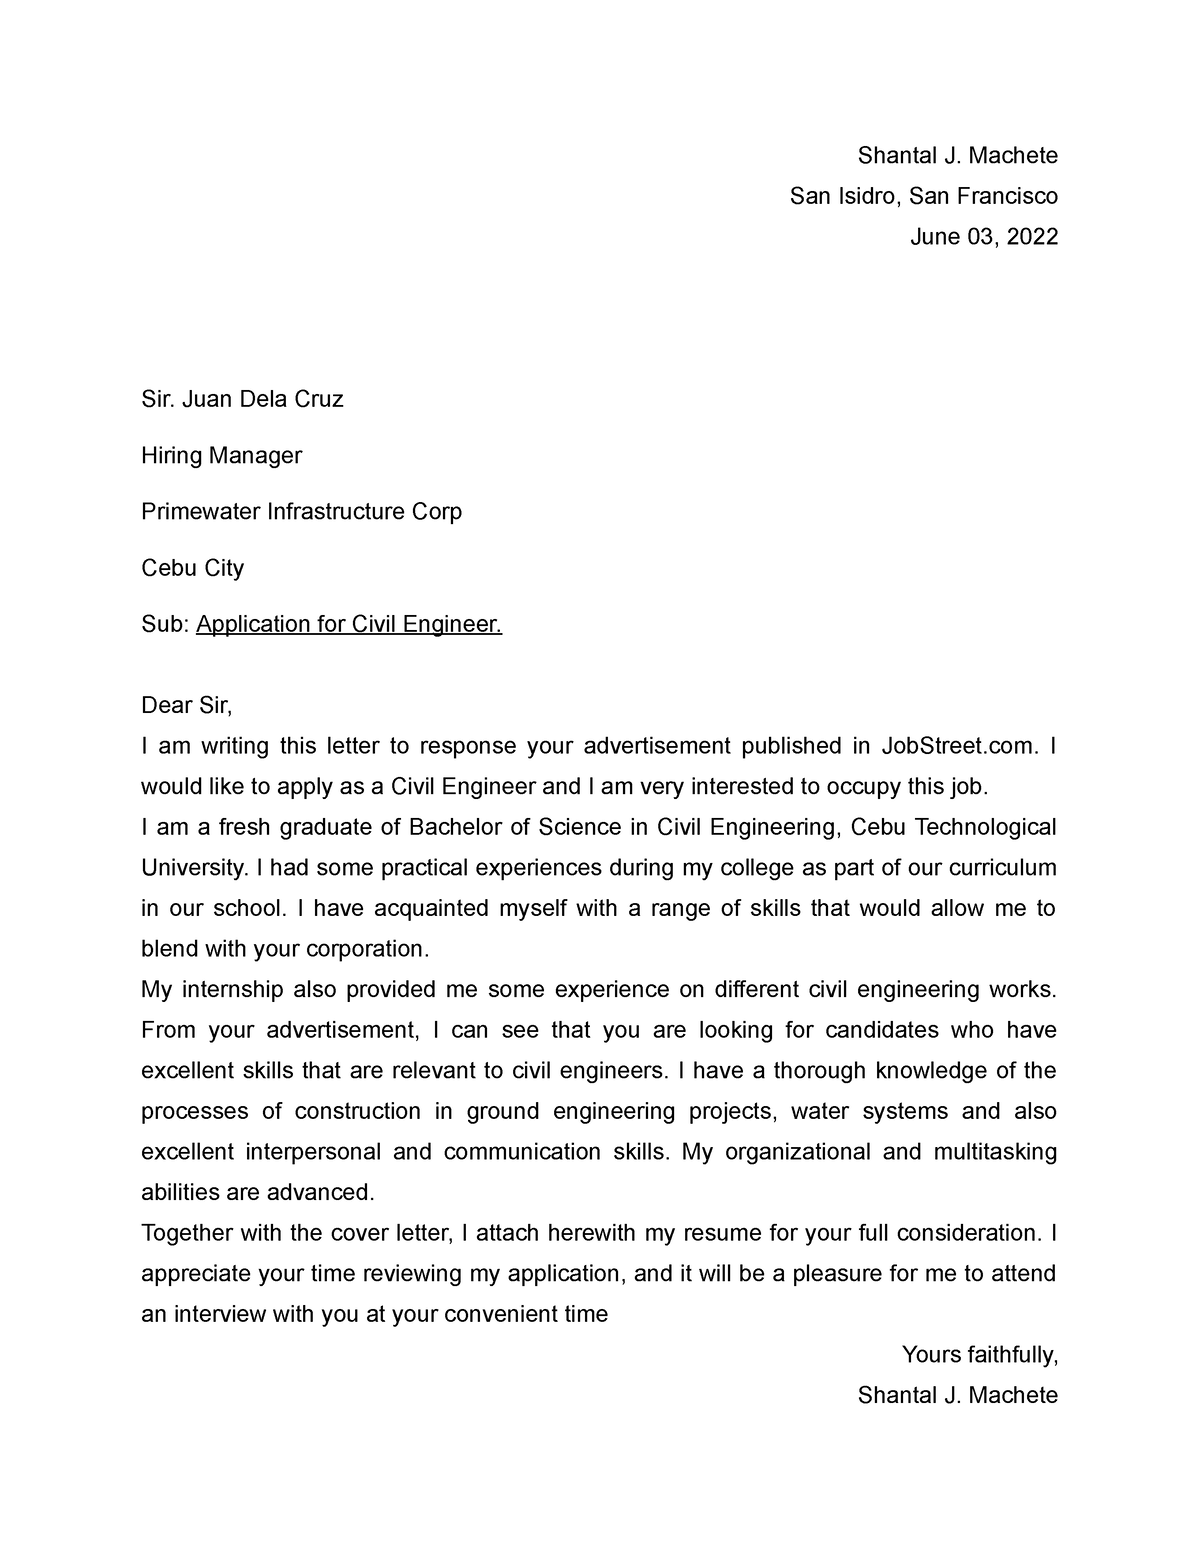 Application Letter Civilengineering - Shantal J. Machete San Isidro ...